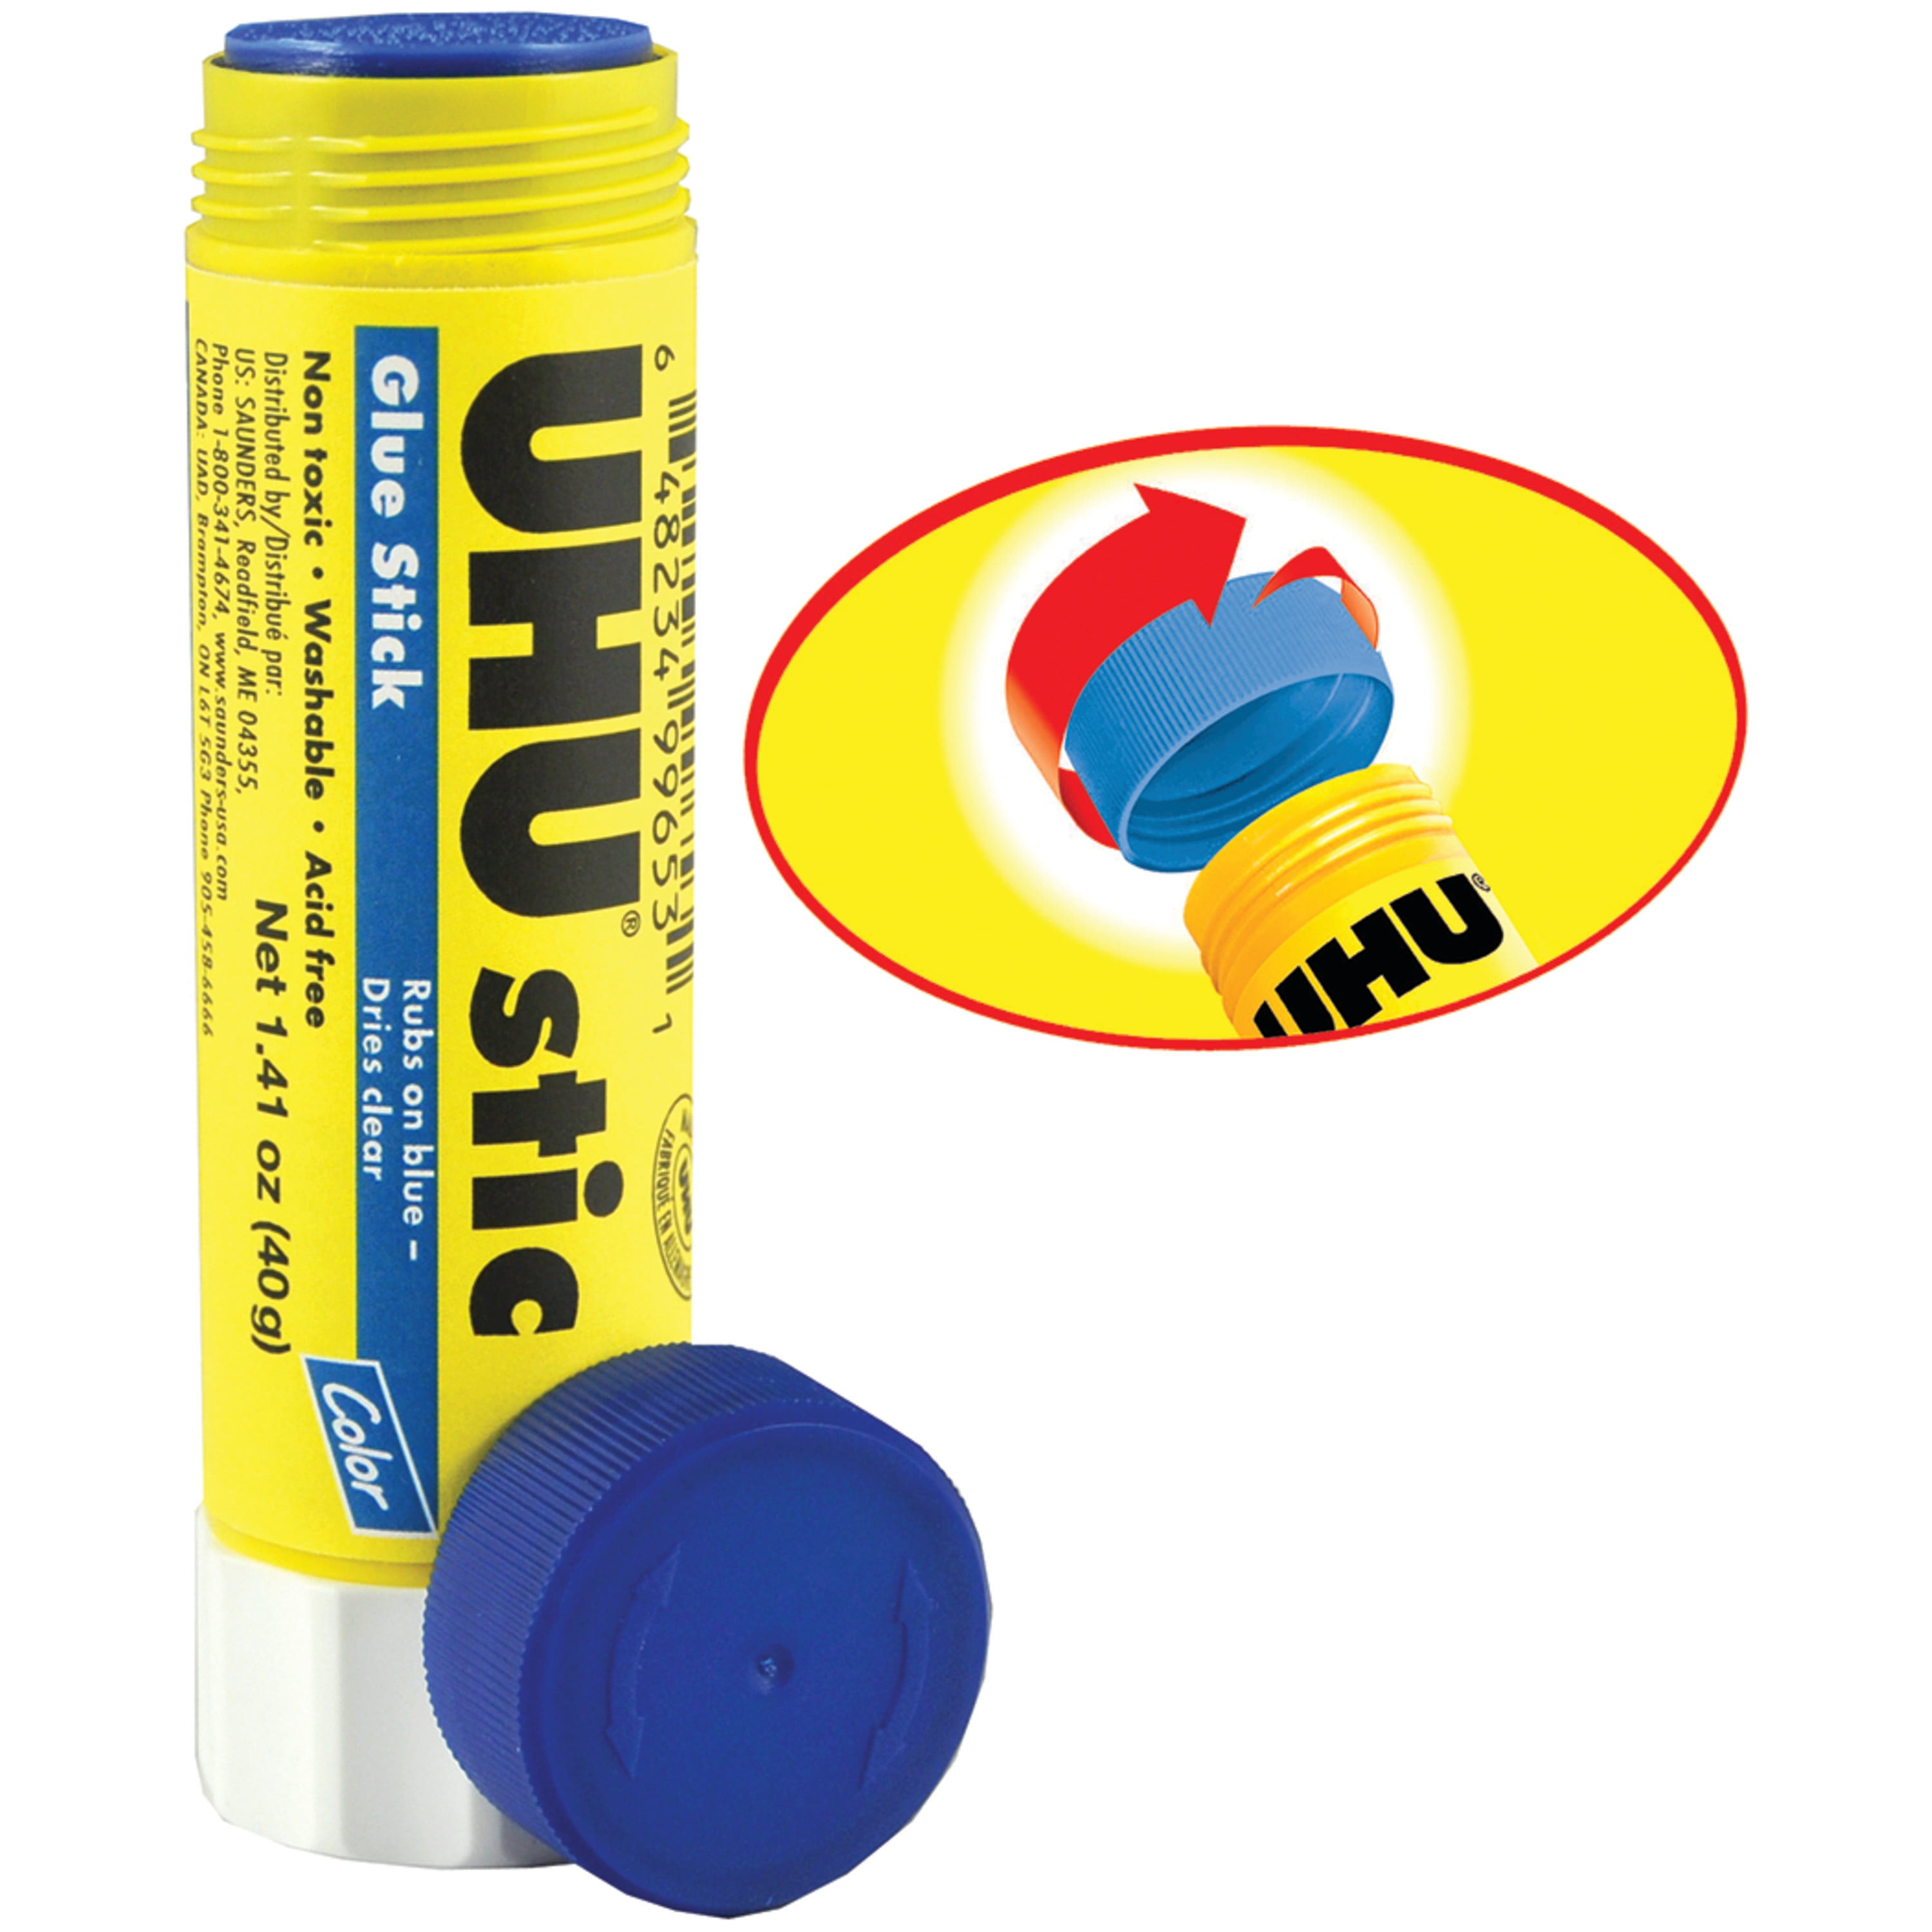 Supply 150ML UHU UHN DIY nonwoven fabric special glue/photo glue alcohol  glue